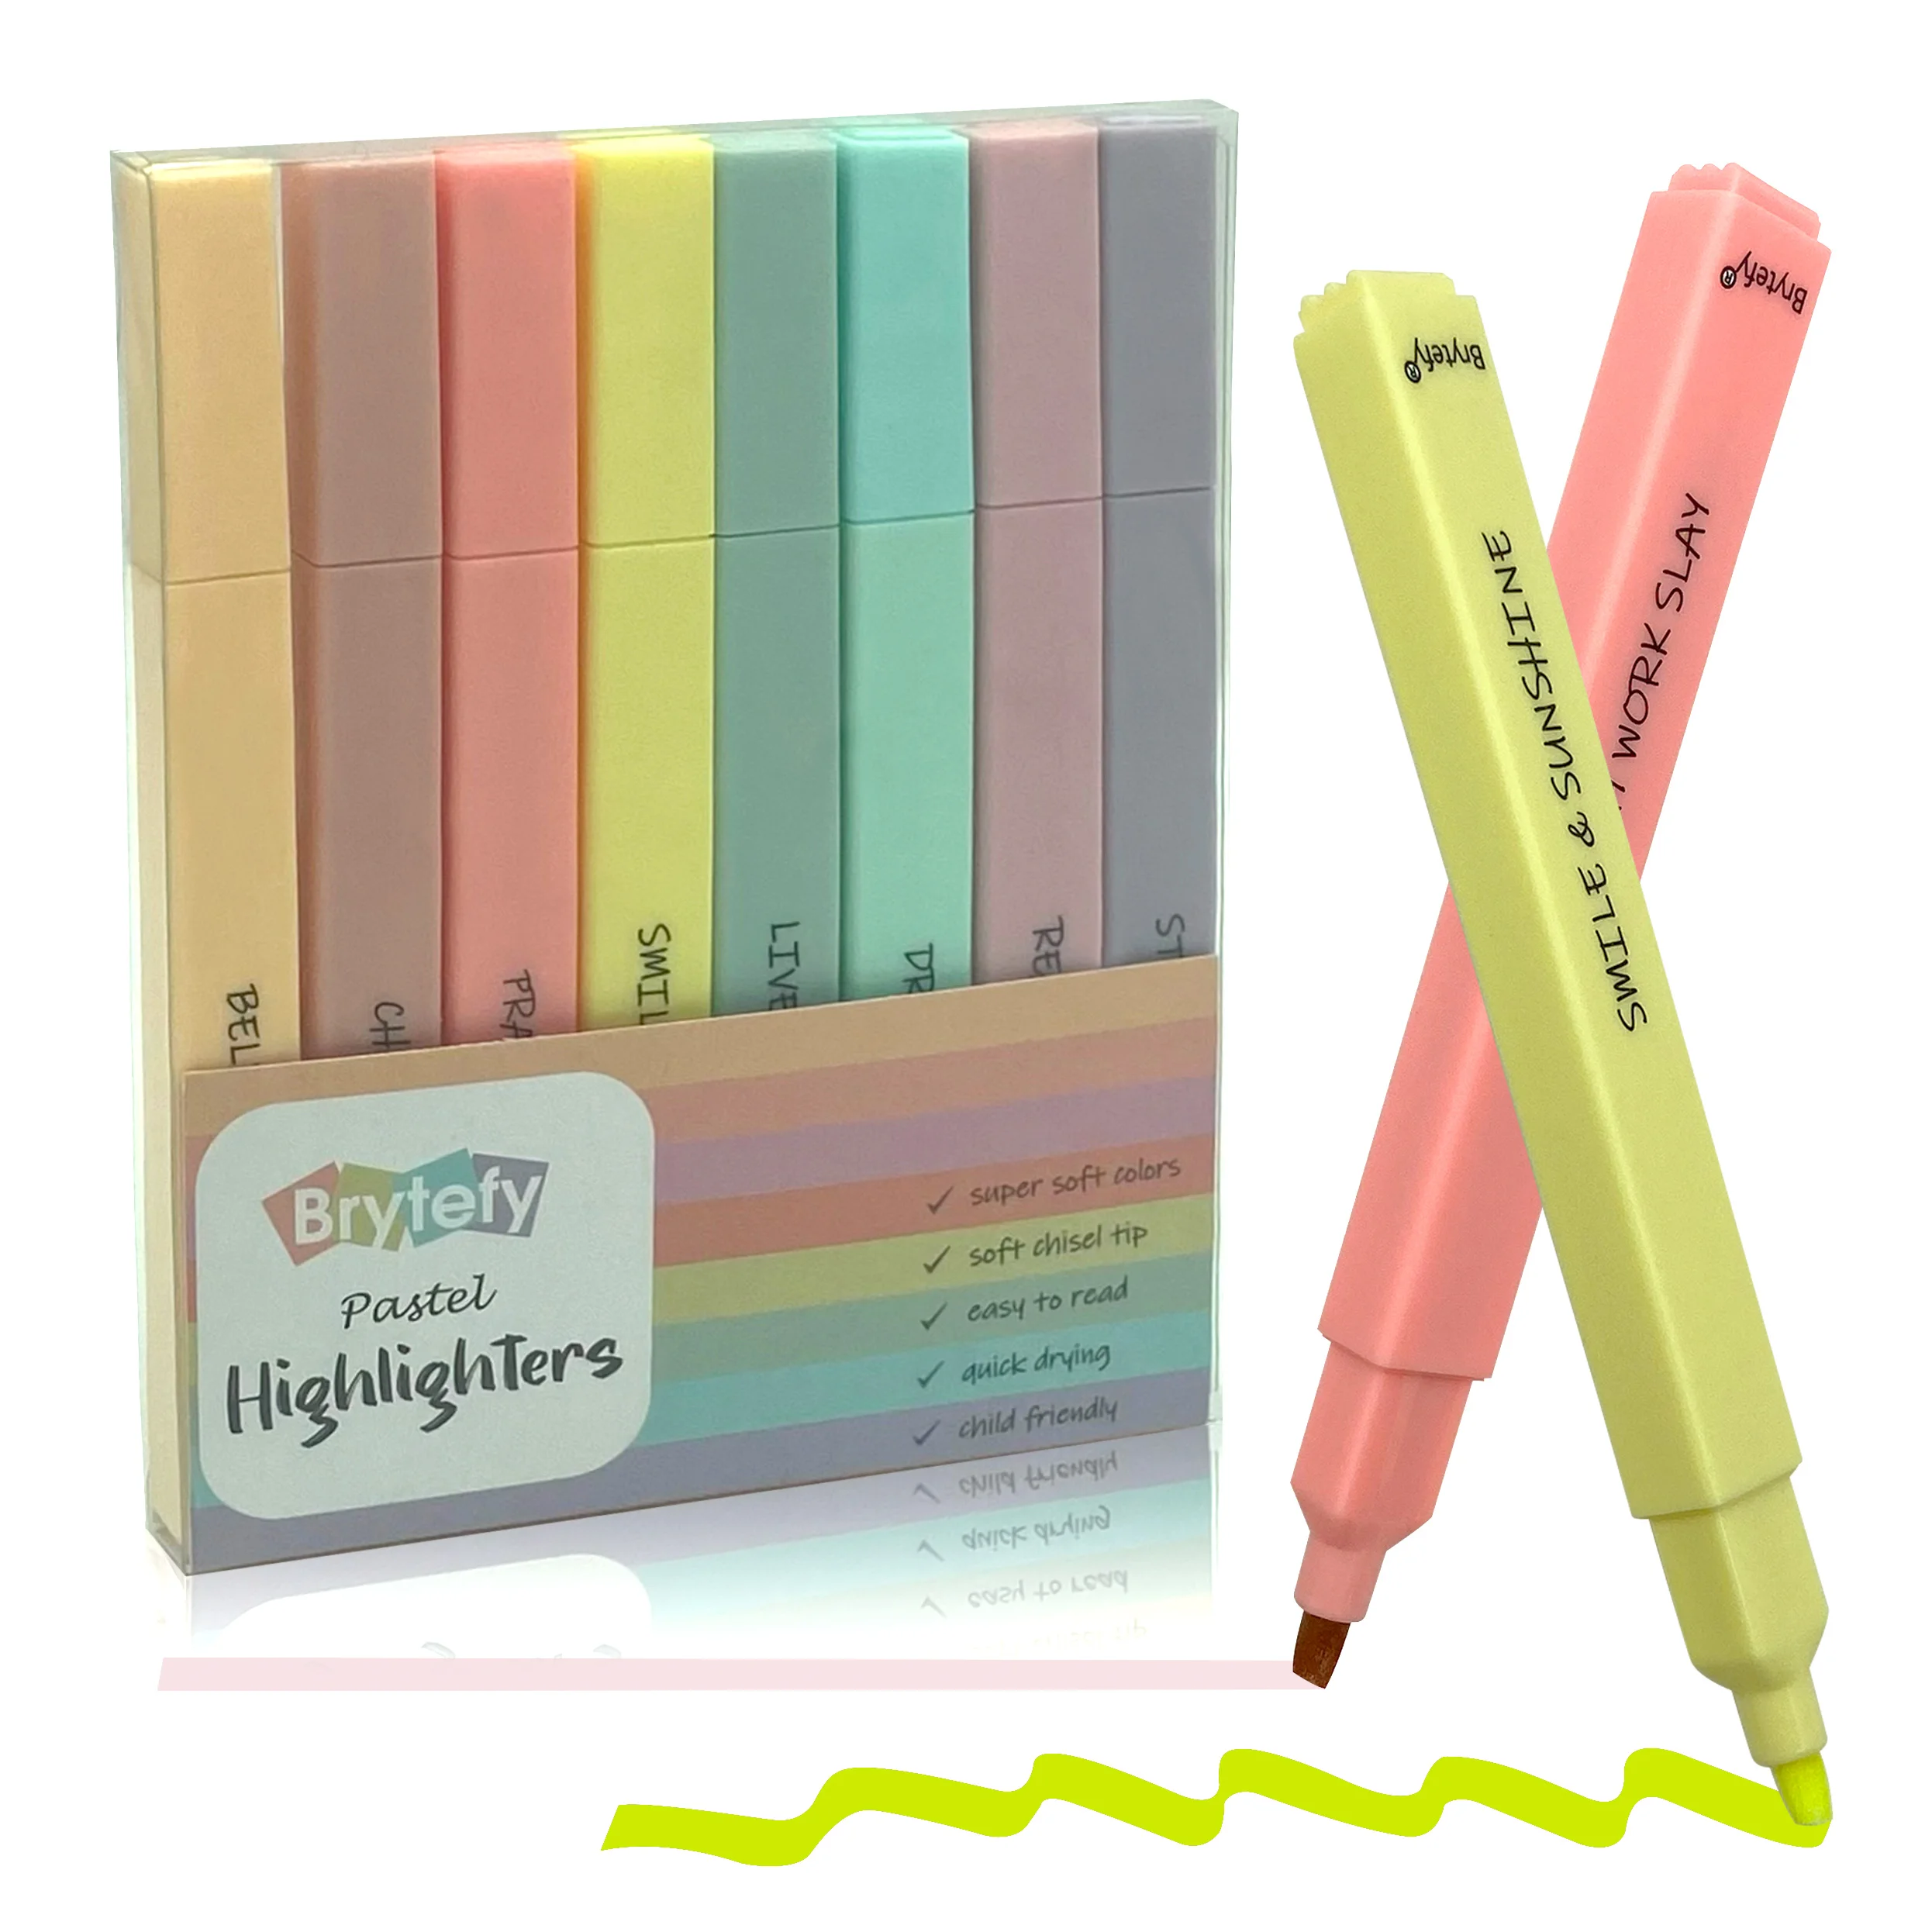 

8Pcs Bible Highlighter Pastel Marker Pen Set Different Bright Colors Chisel Tip Square Highlighter Pen Set